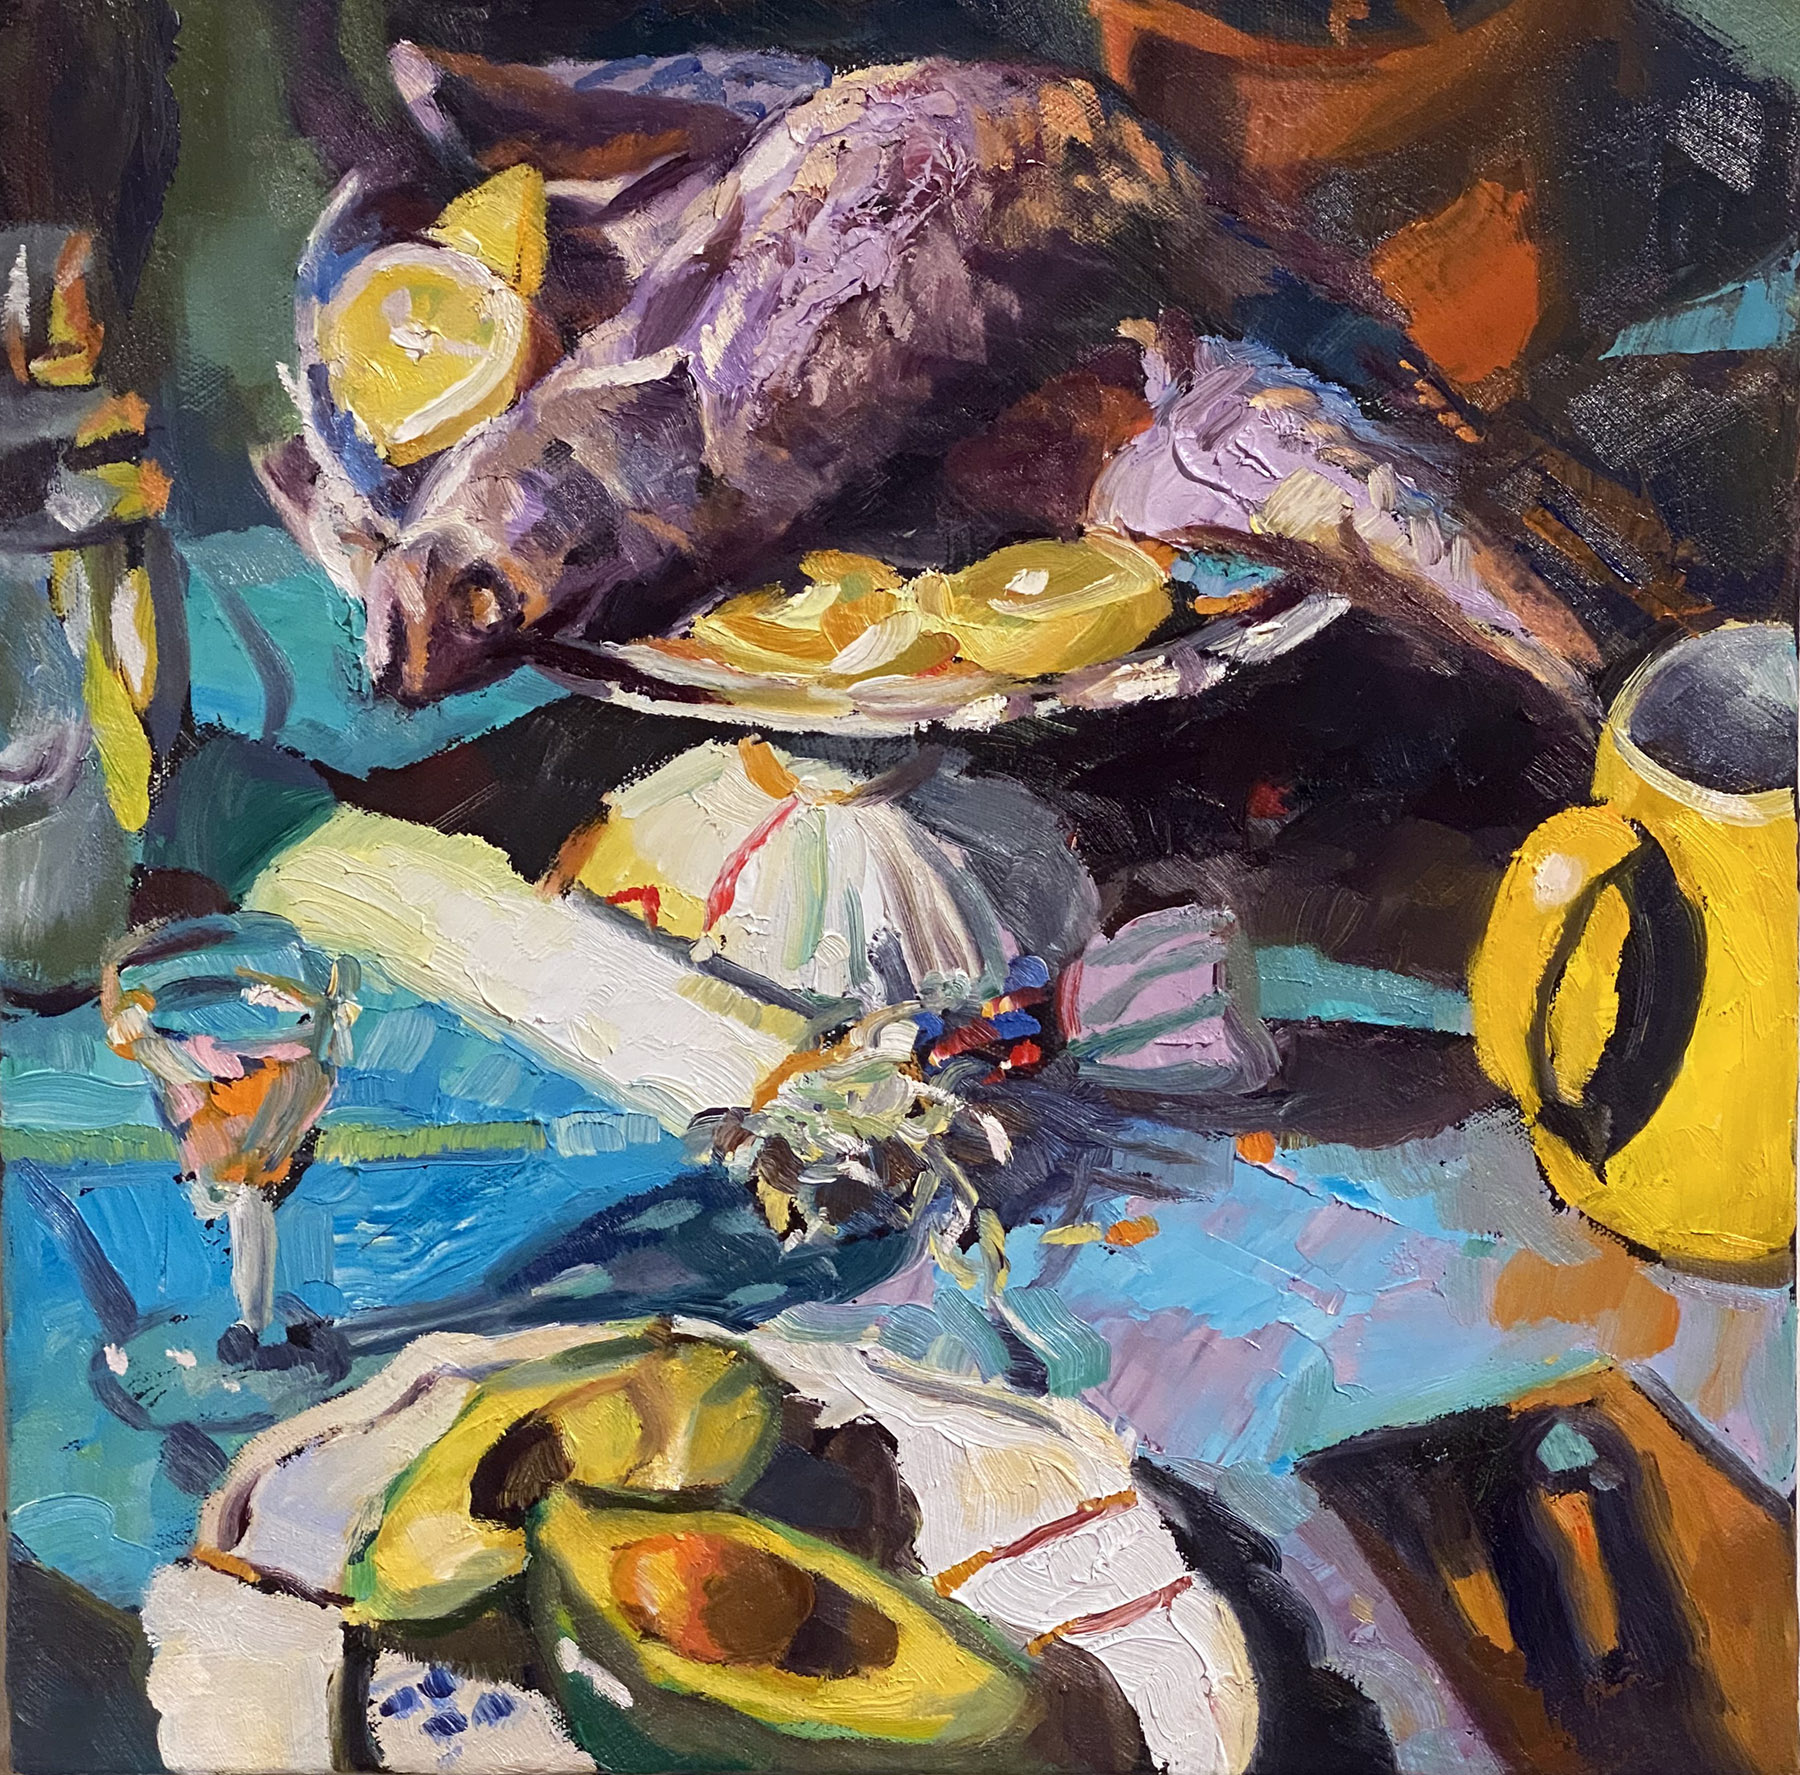 Rosemary Valadon 'Summer Days 2' oil on canvas 40 x 40cm $4,500